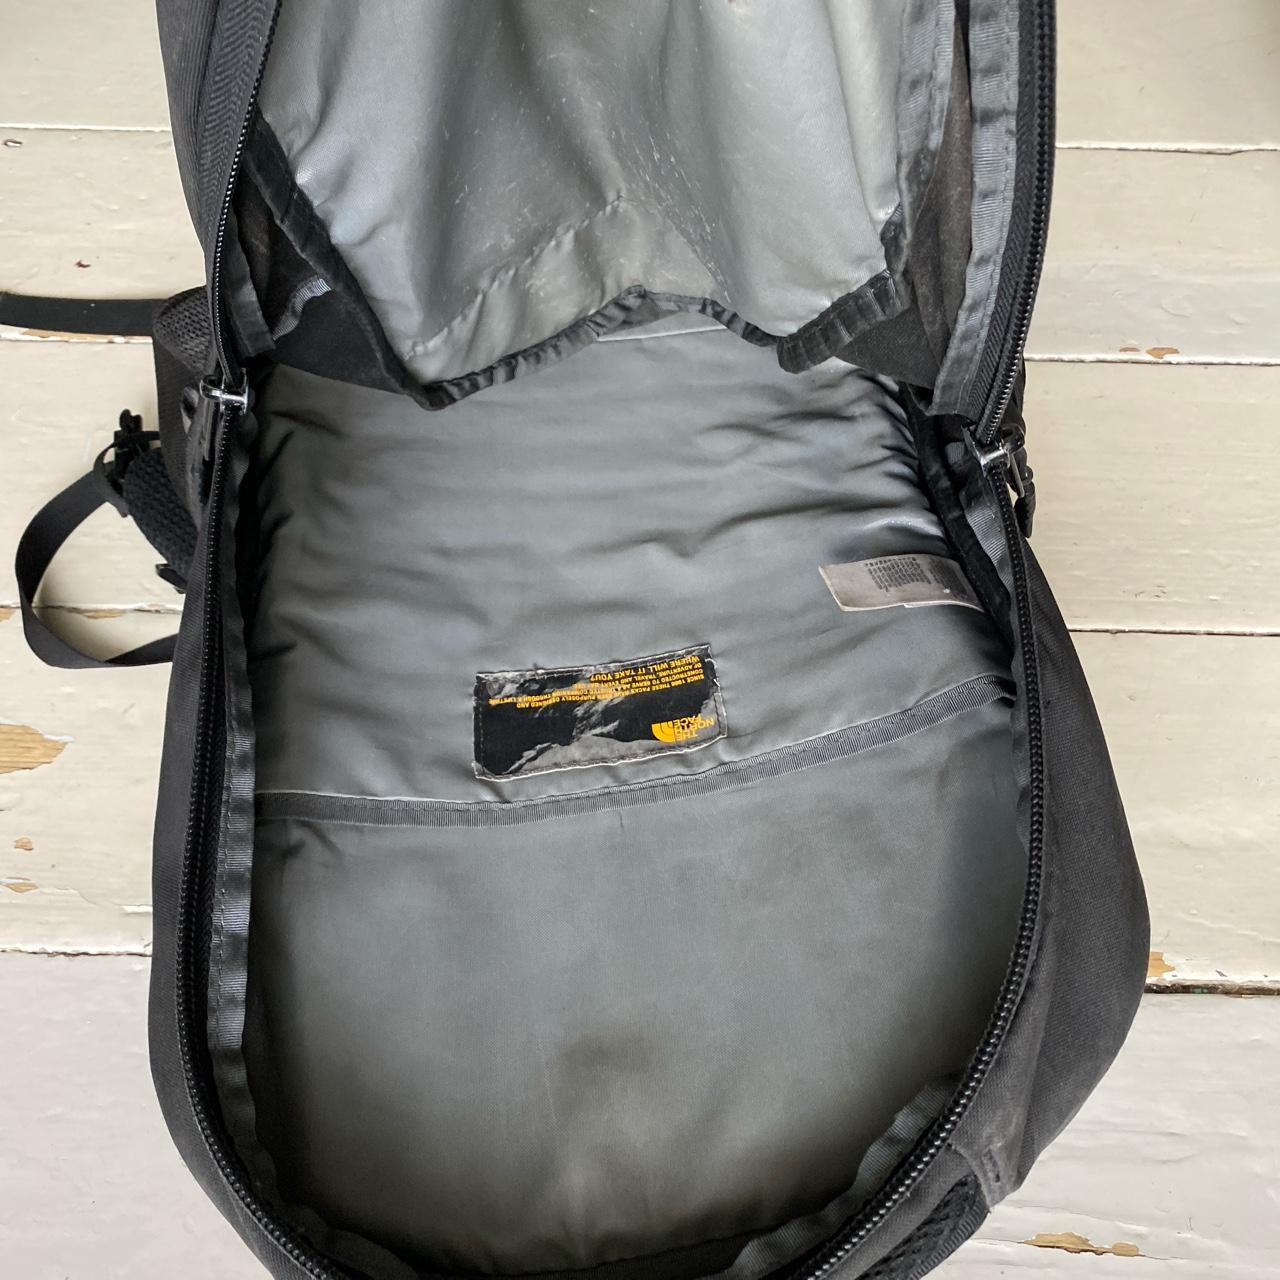 The North Face Vault Rucksack Backpack Bag Black and White